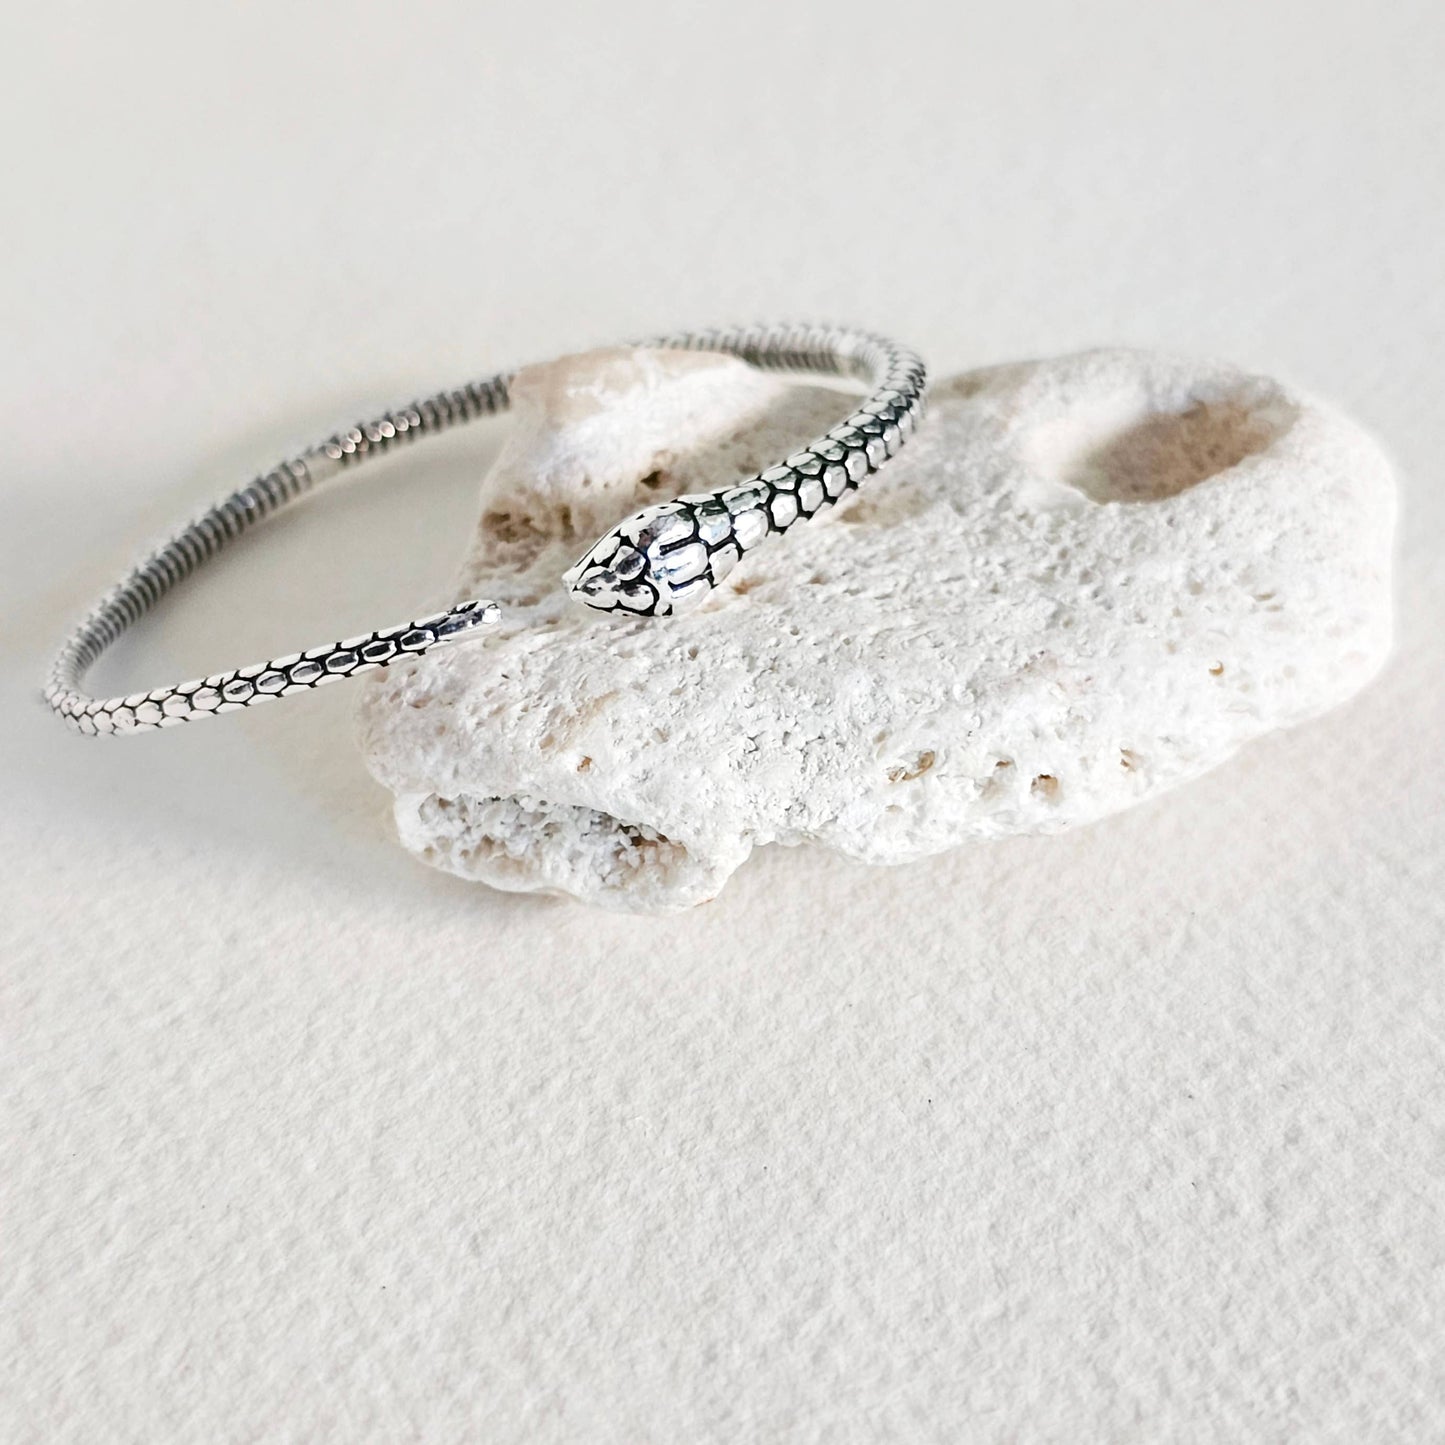 Bisjoux - Silver snake serpent cuff bangle bracelet handmade